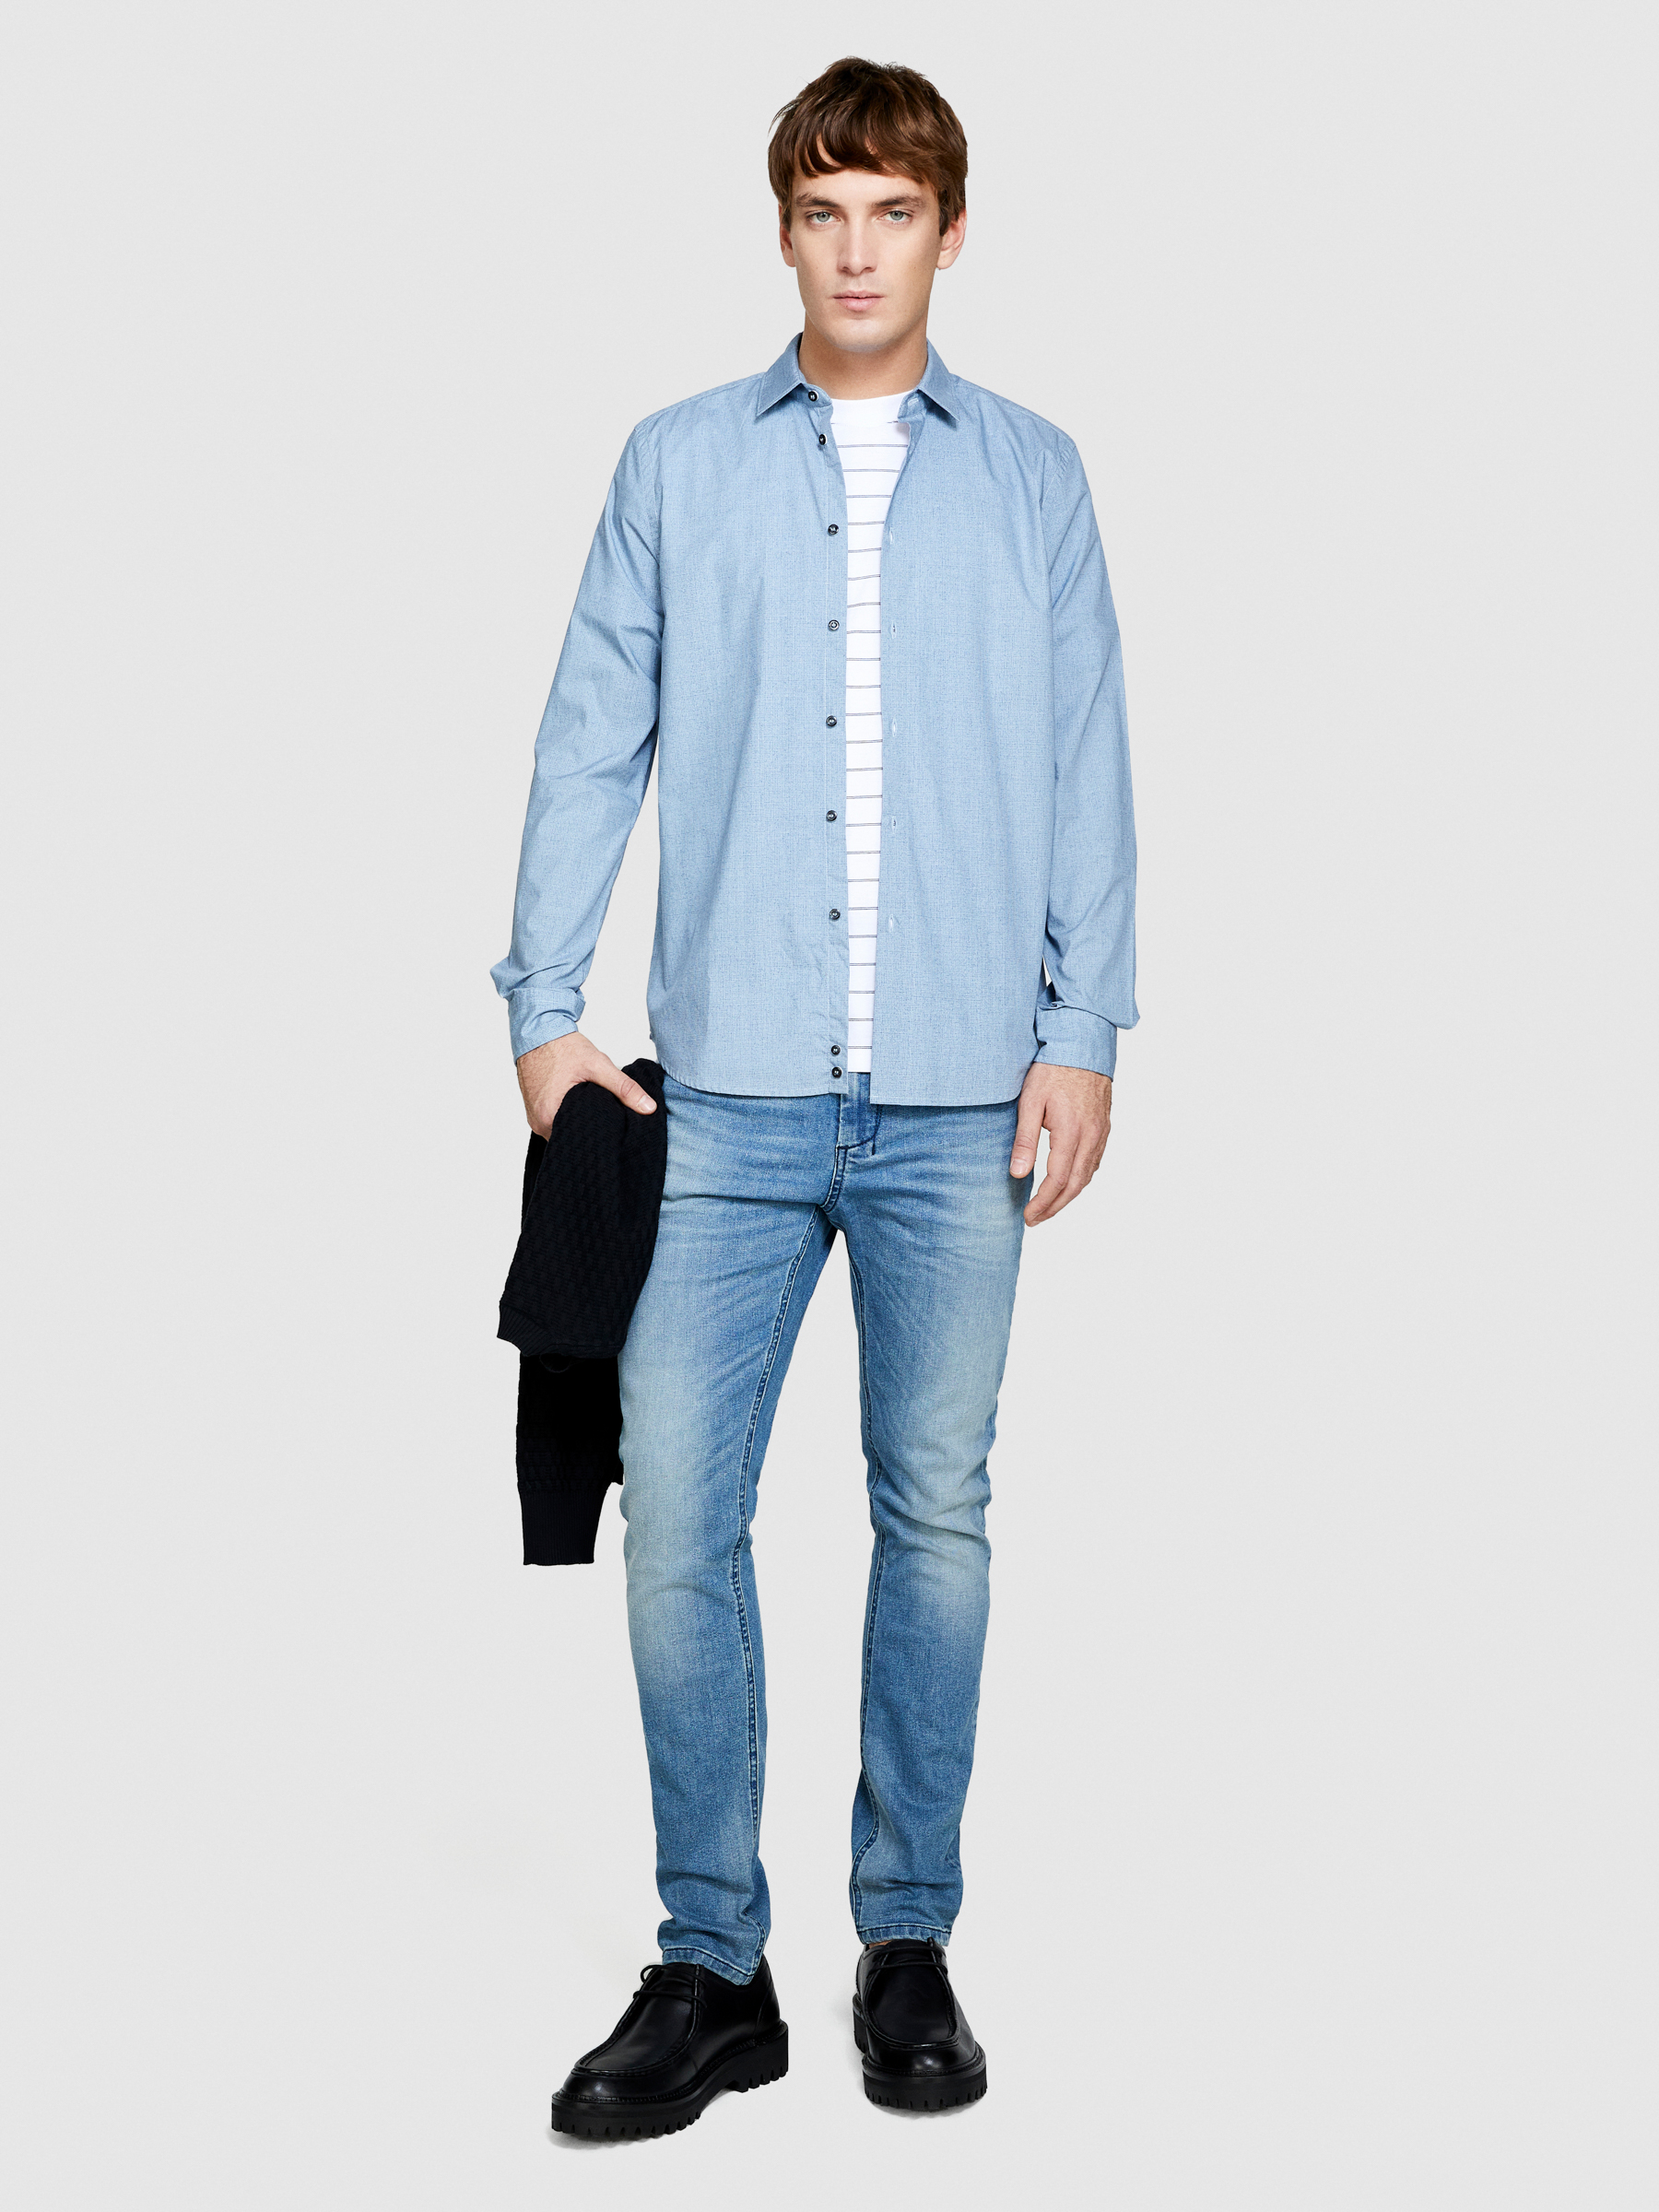 Sisley - Printed Shirt, Man, Light Blue, Size: 45